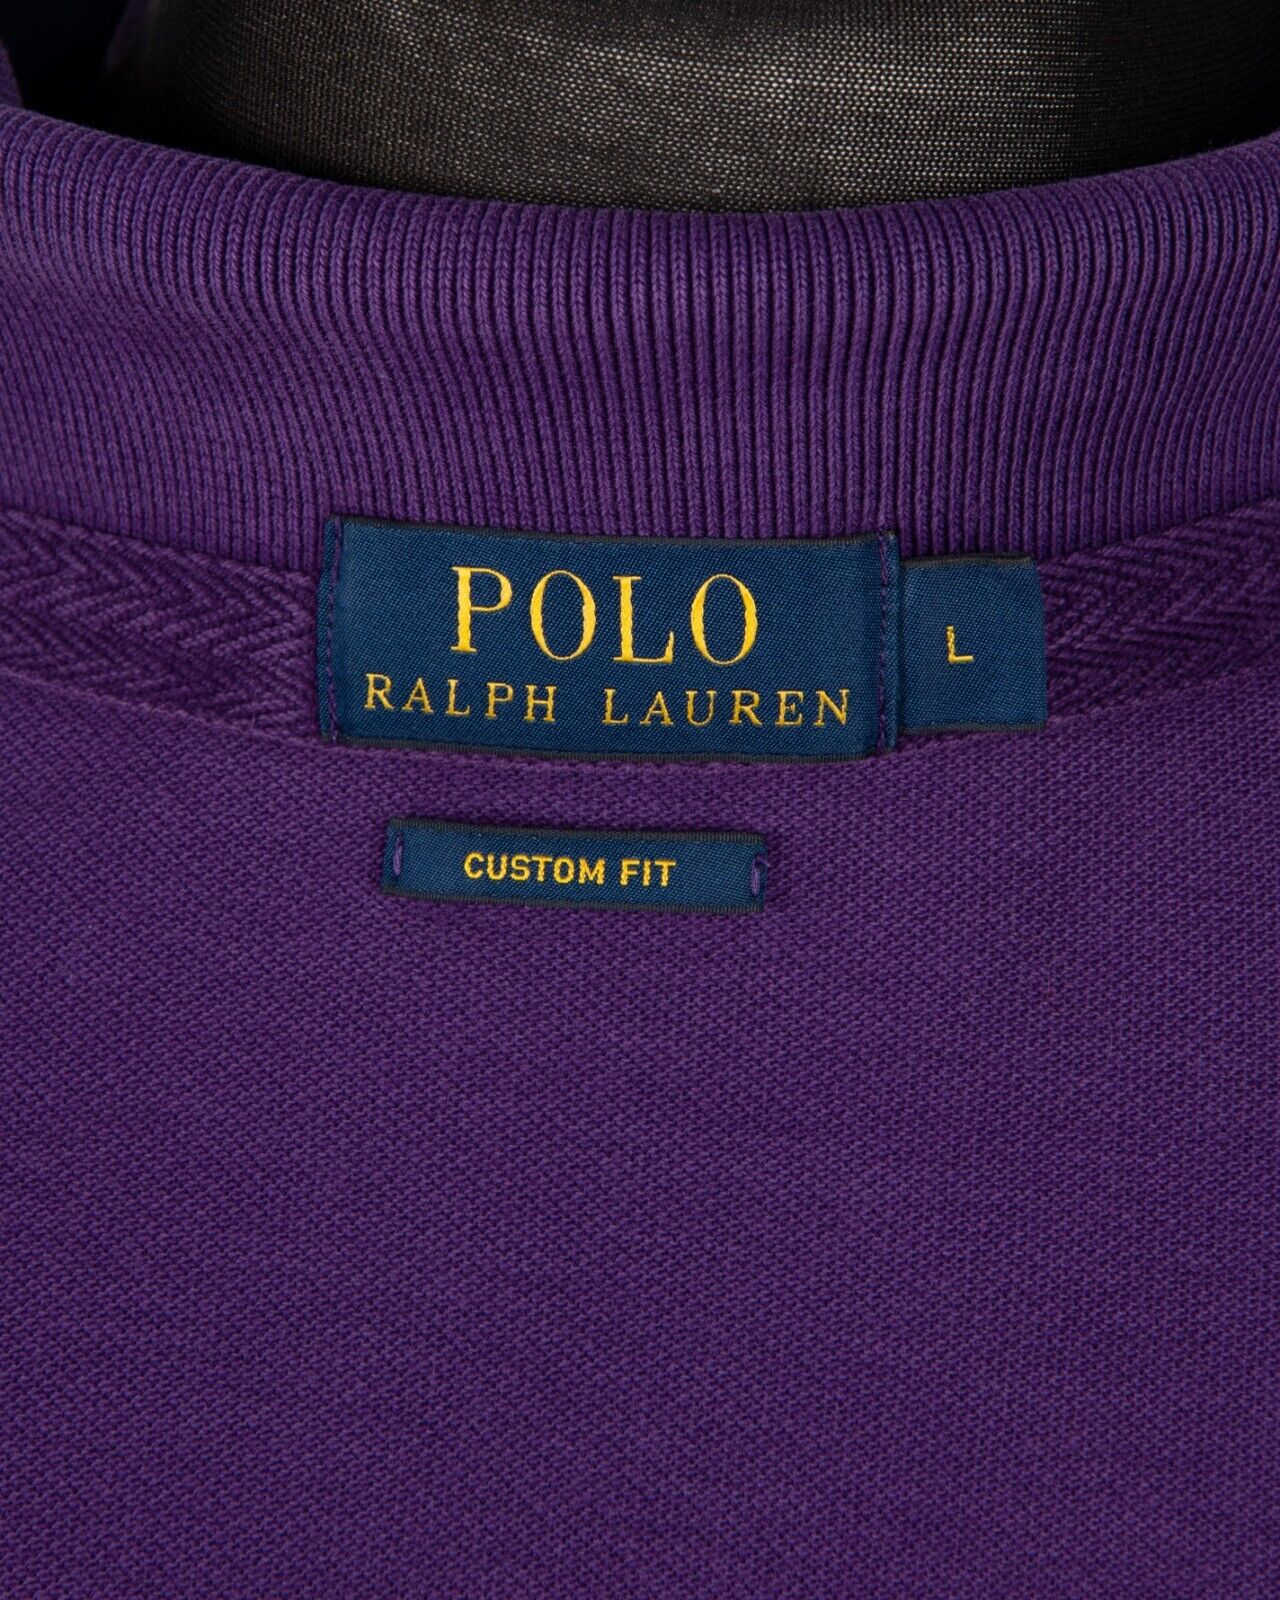 POLO RALPH LAUREN London Polo Shirt Purple Cotton Mens Big Pony Spell